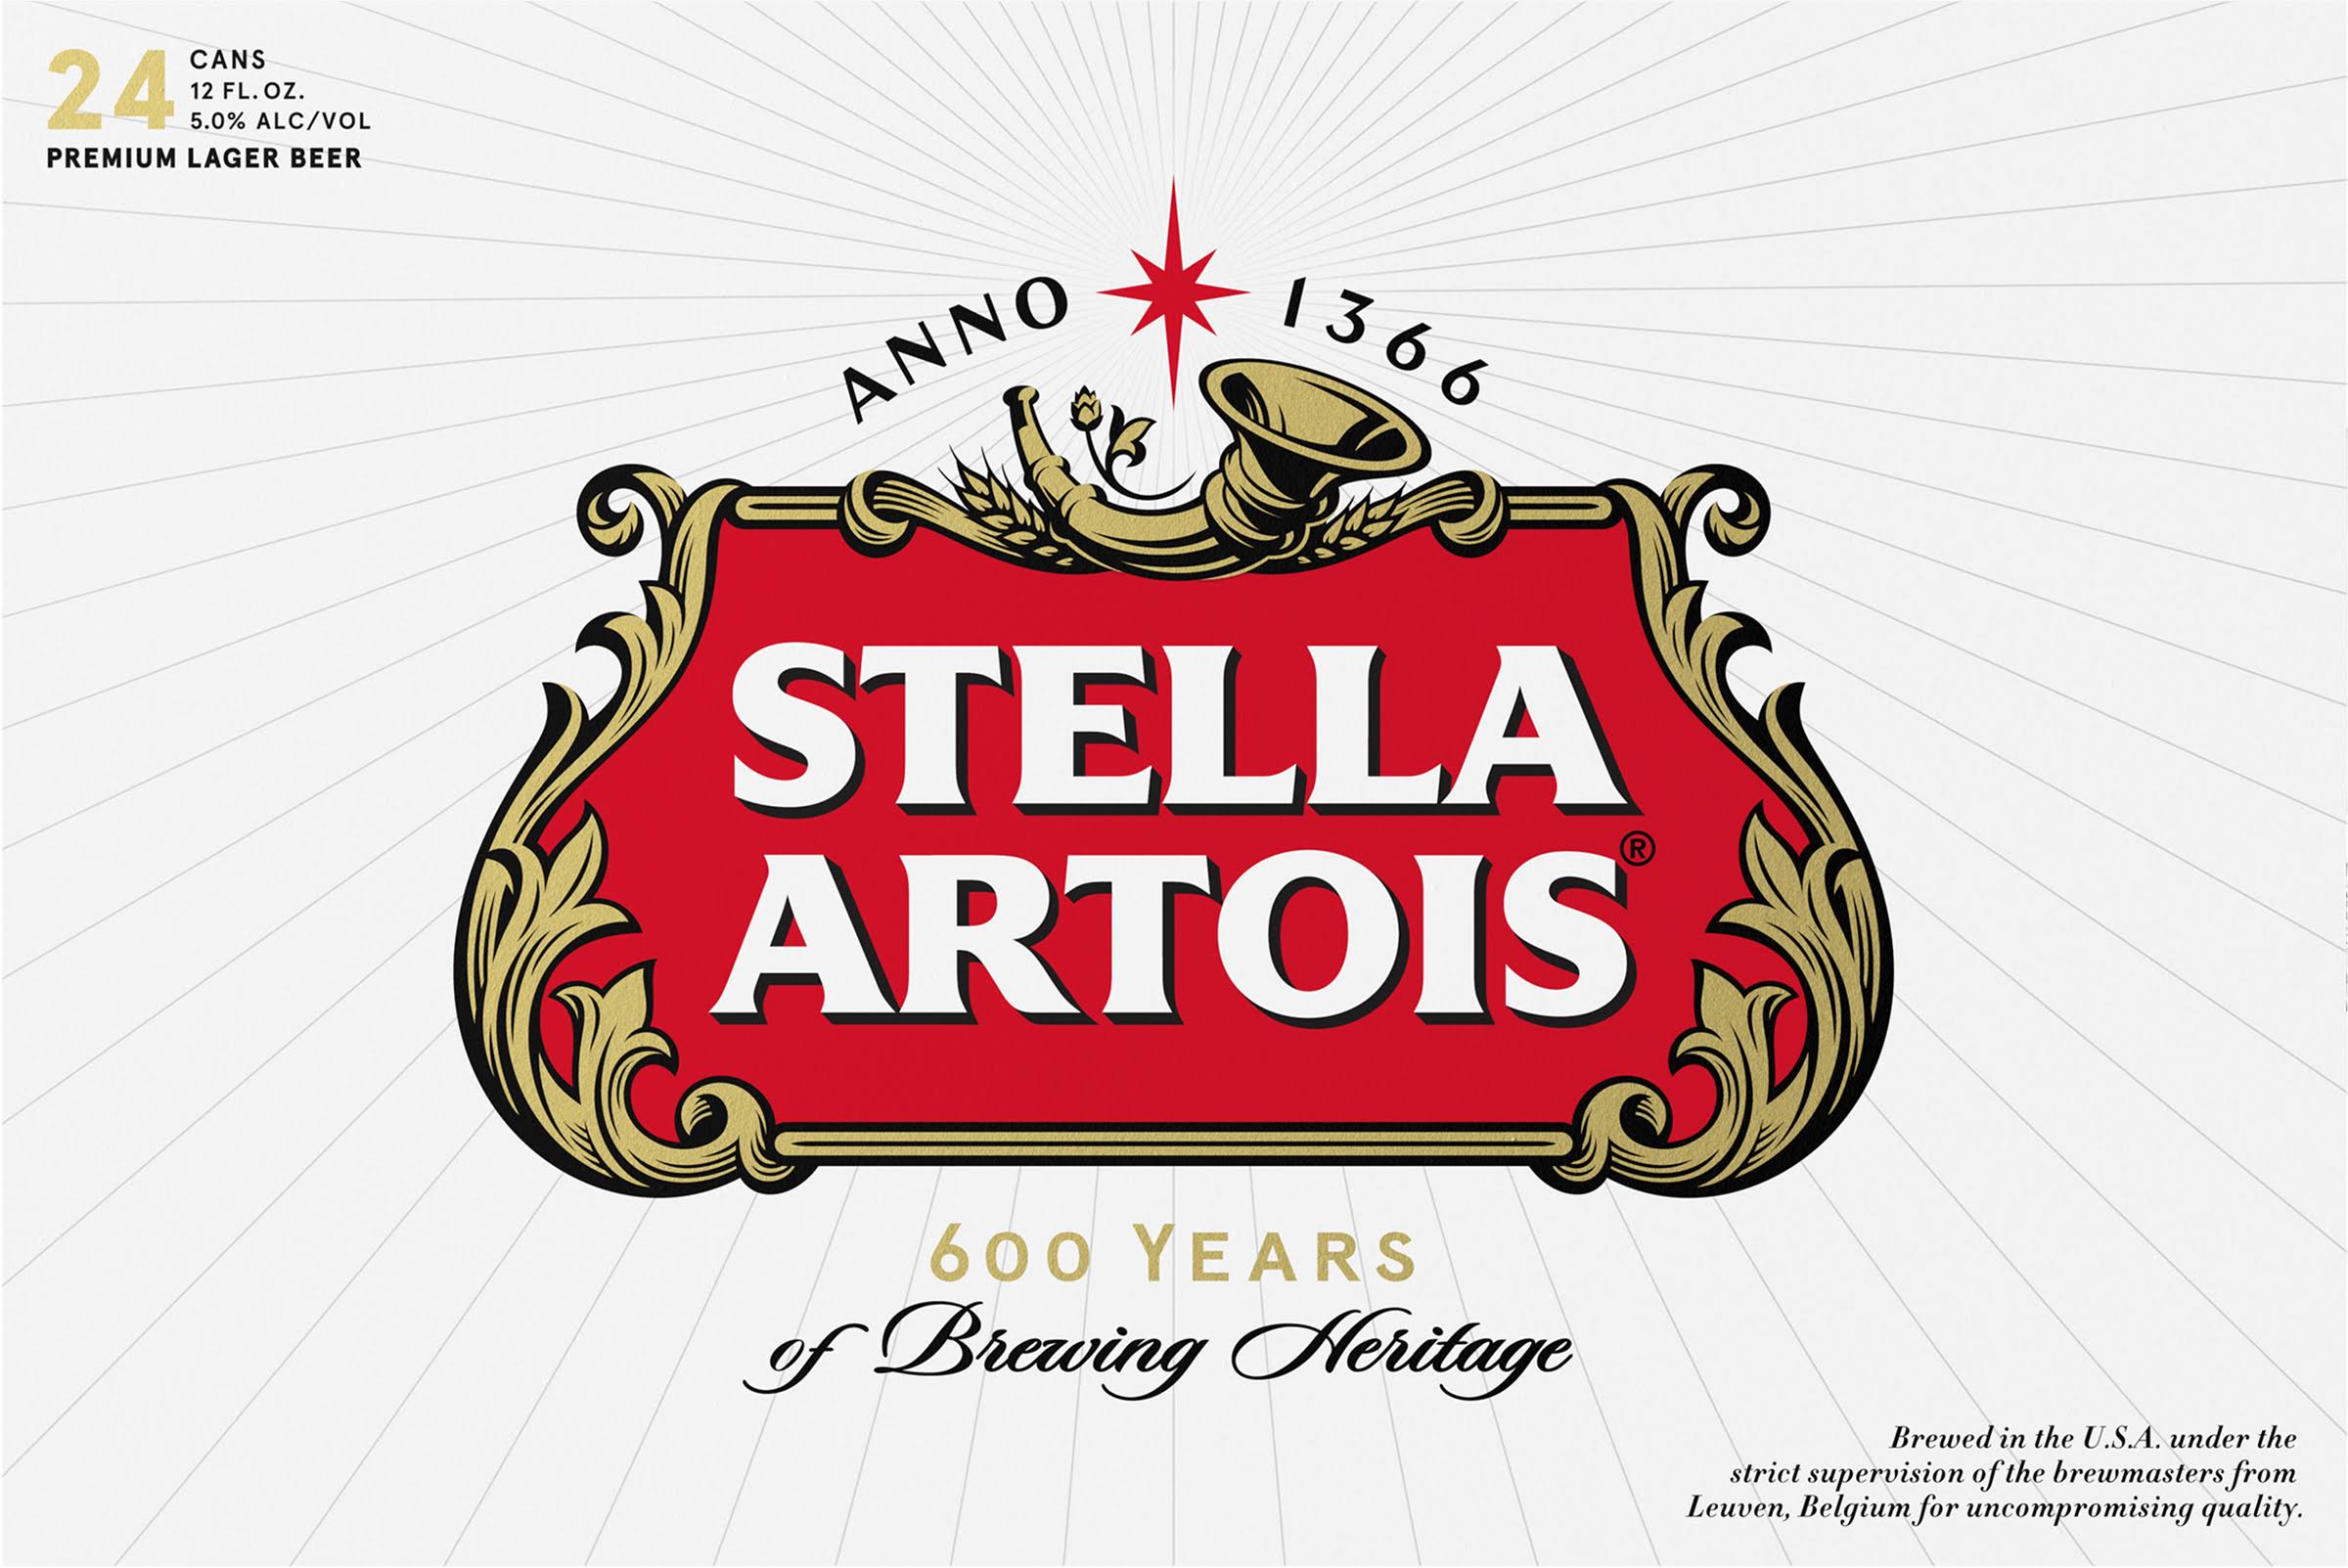 Stella Artois Beer, Lager, Premium, 24 Pack - 24 pack, 12 fl oz cans